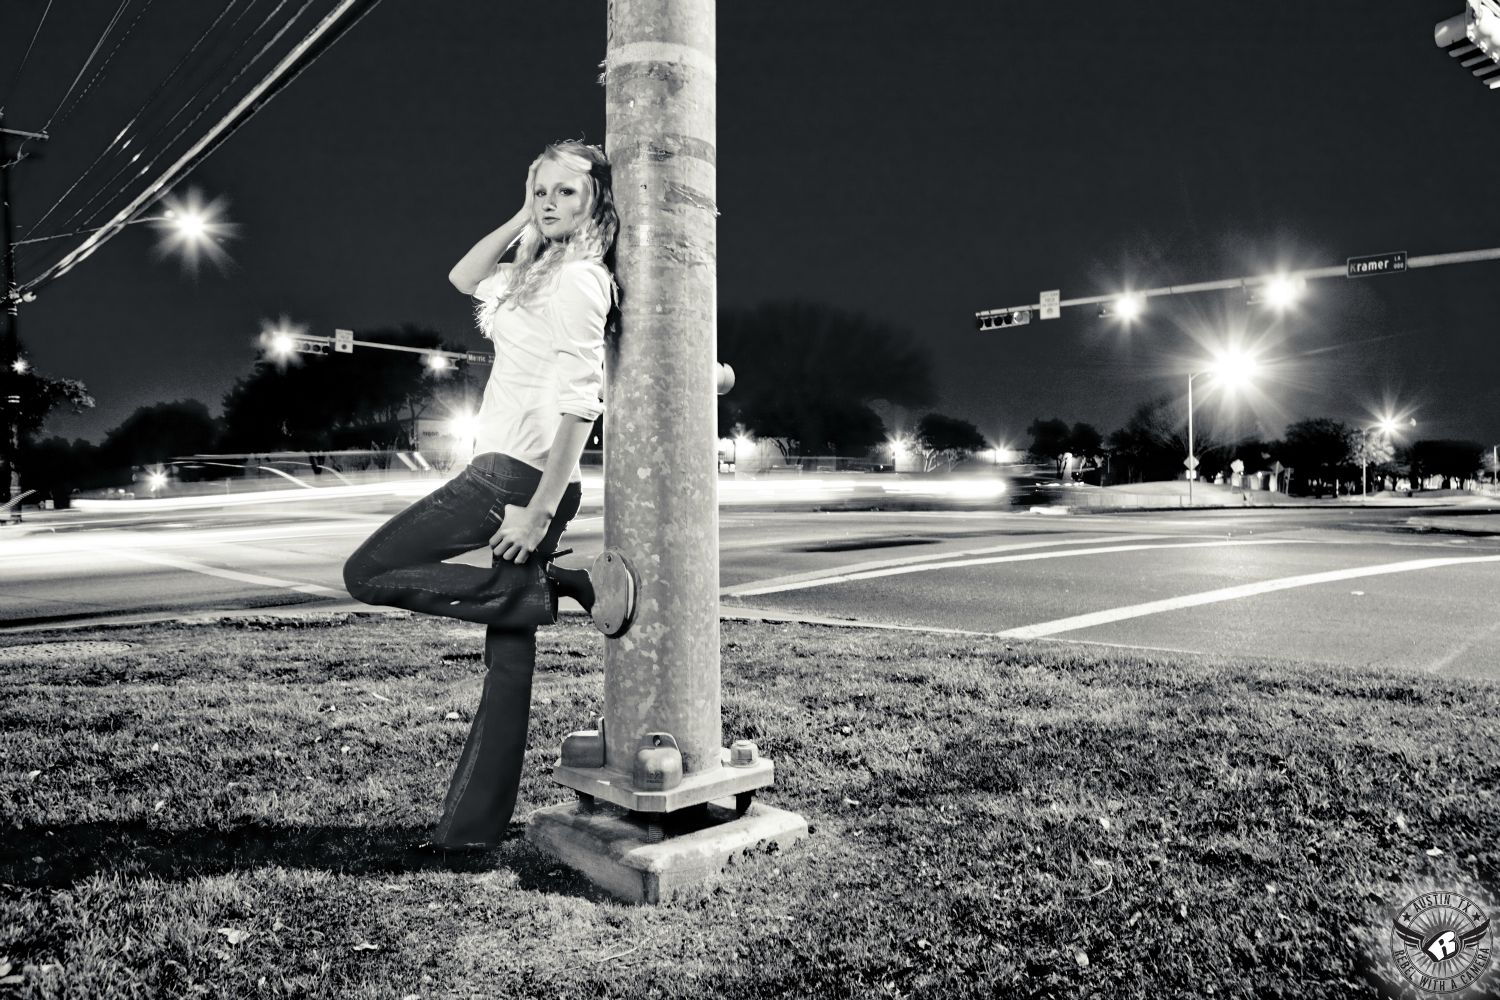 Dramatic night time senior portraits Austin of girl leaning on a traffic light pole long exposure shot.